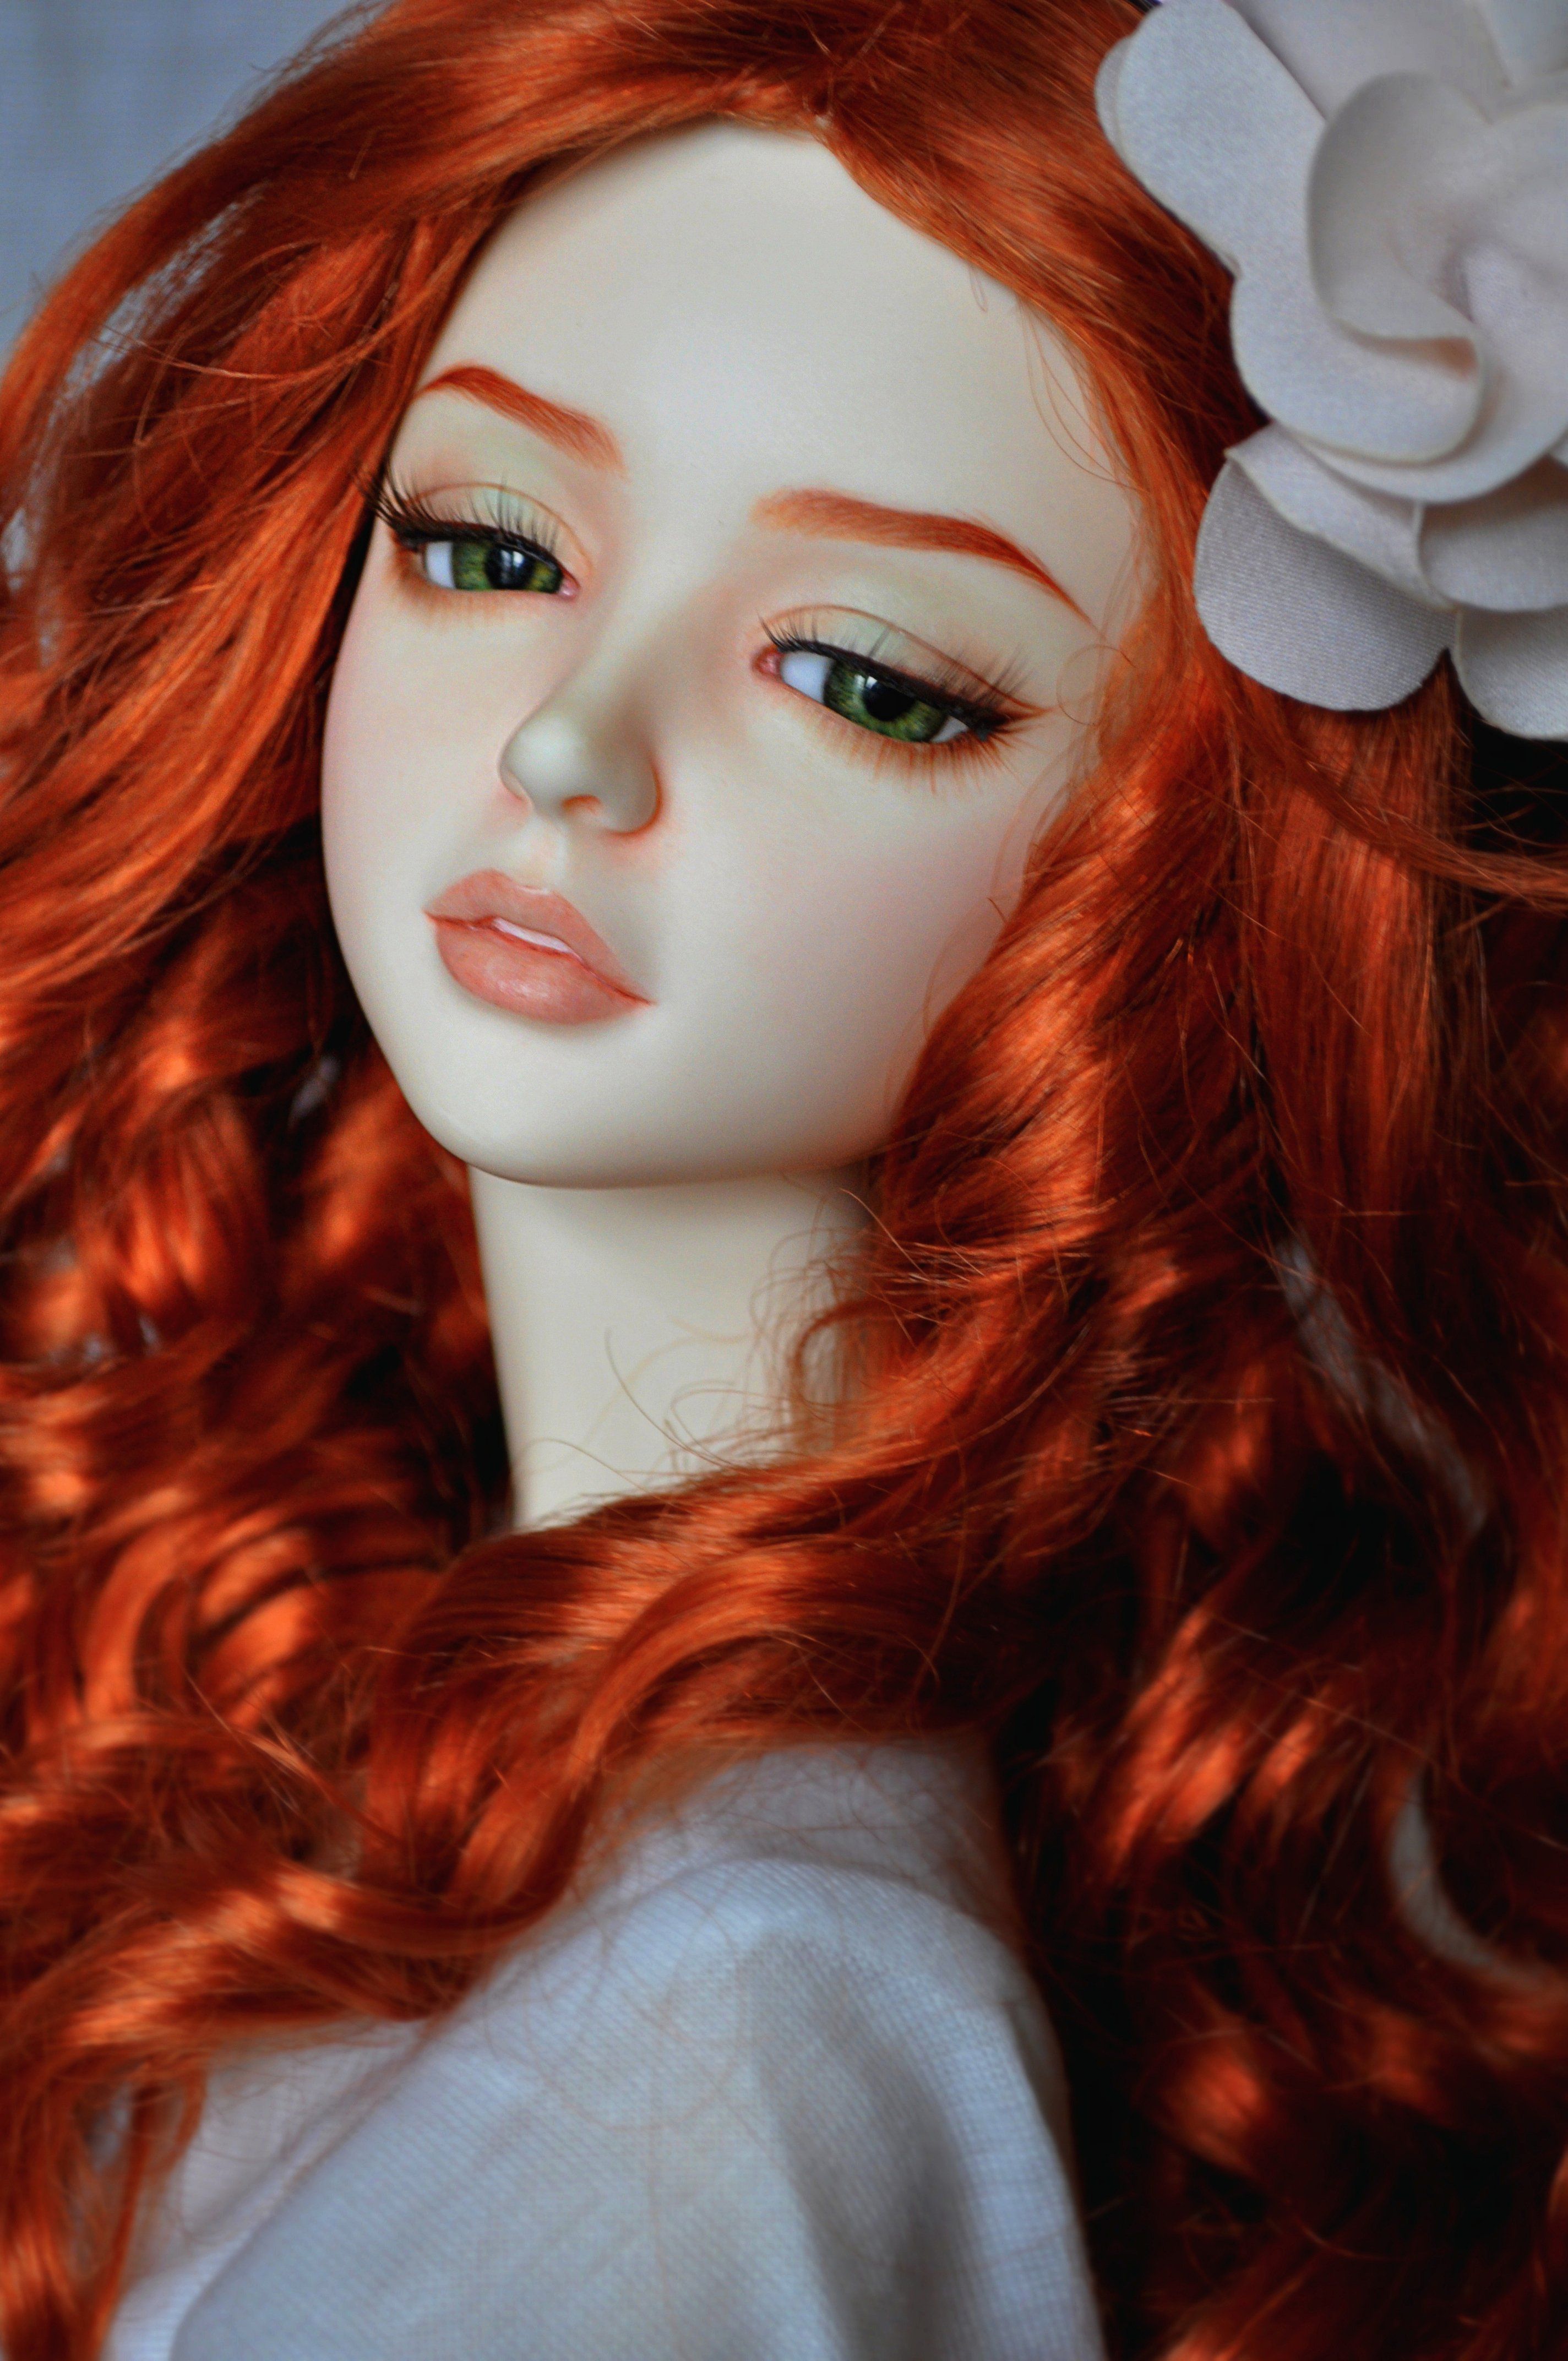 Toys doll baby long hair girl beautiful red hair green eyes